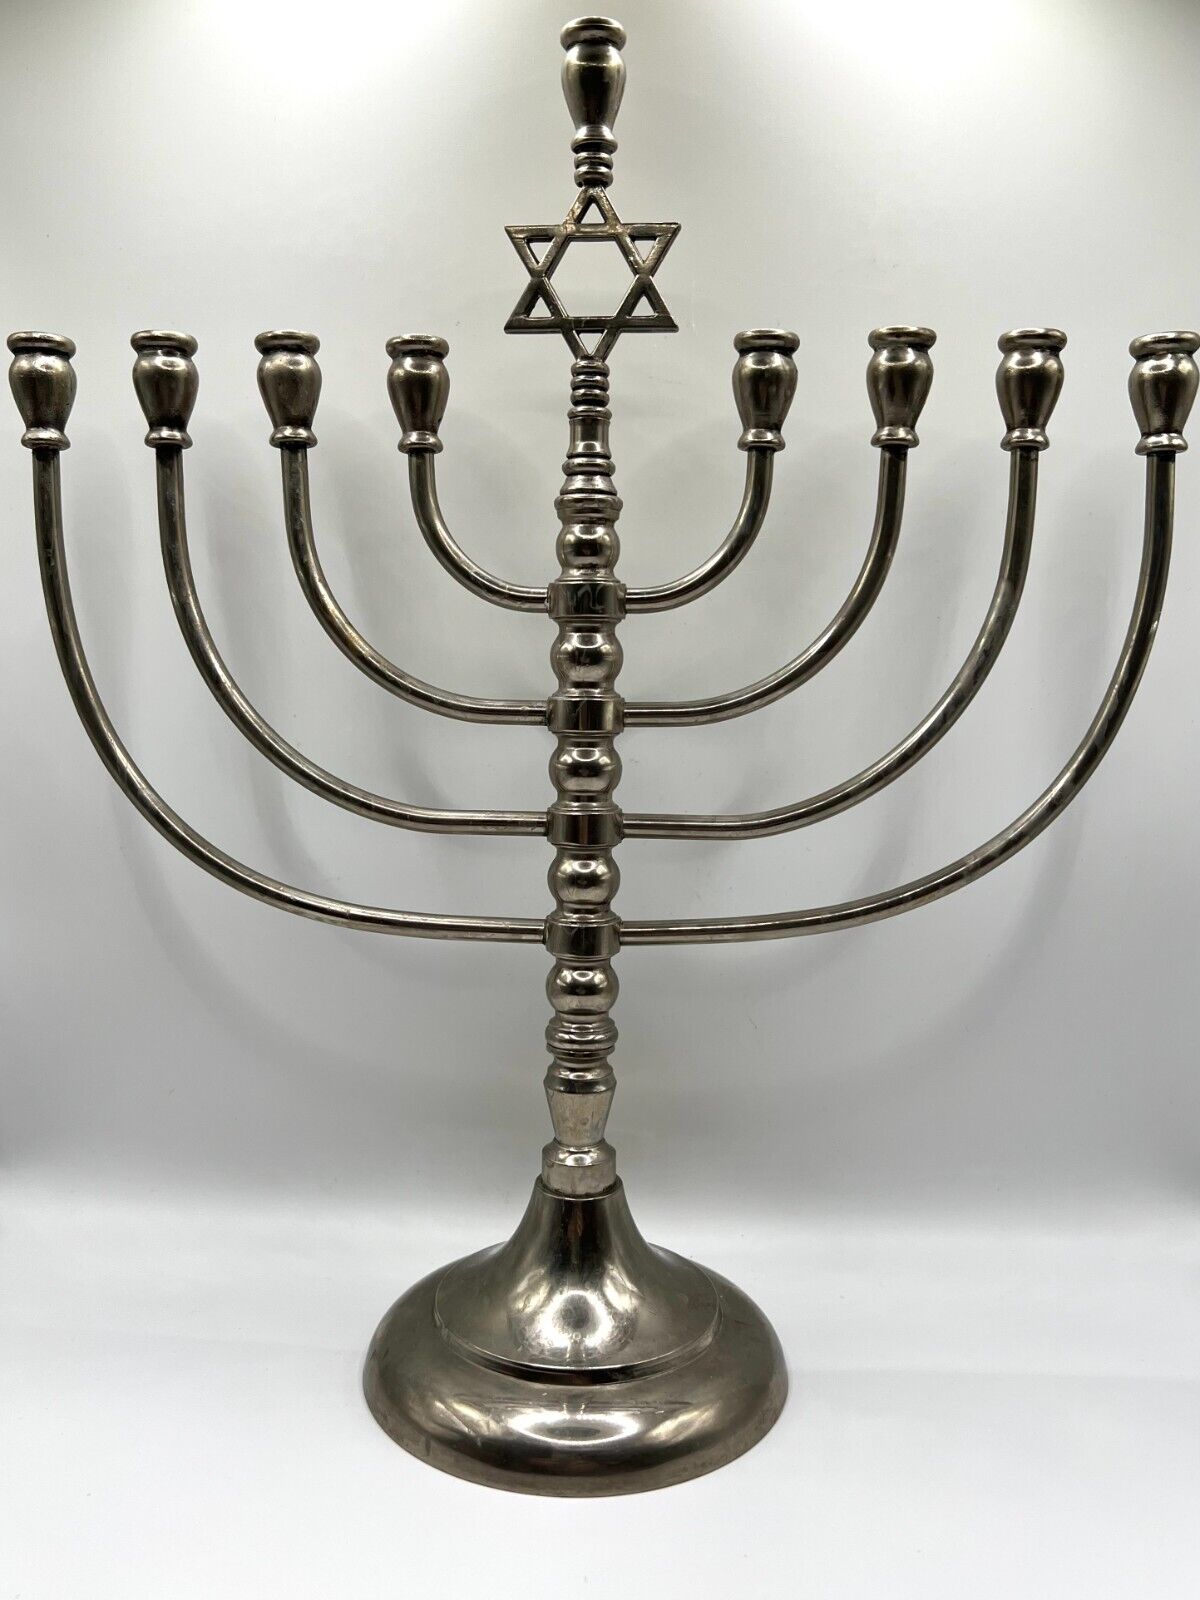 Hanukkah Menorah Silver Color Metal 9 Candle Holders Religious Judaism 13 in